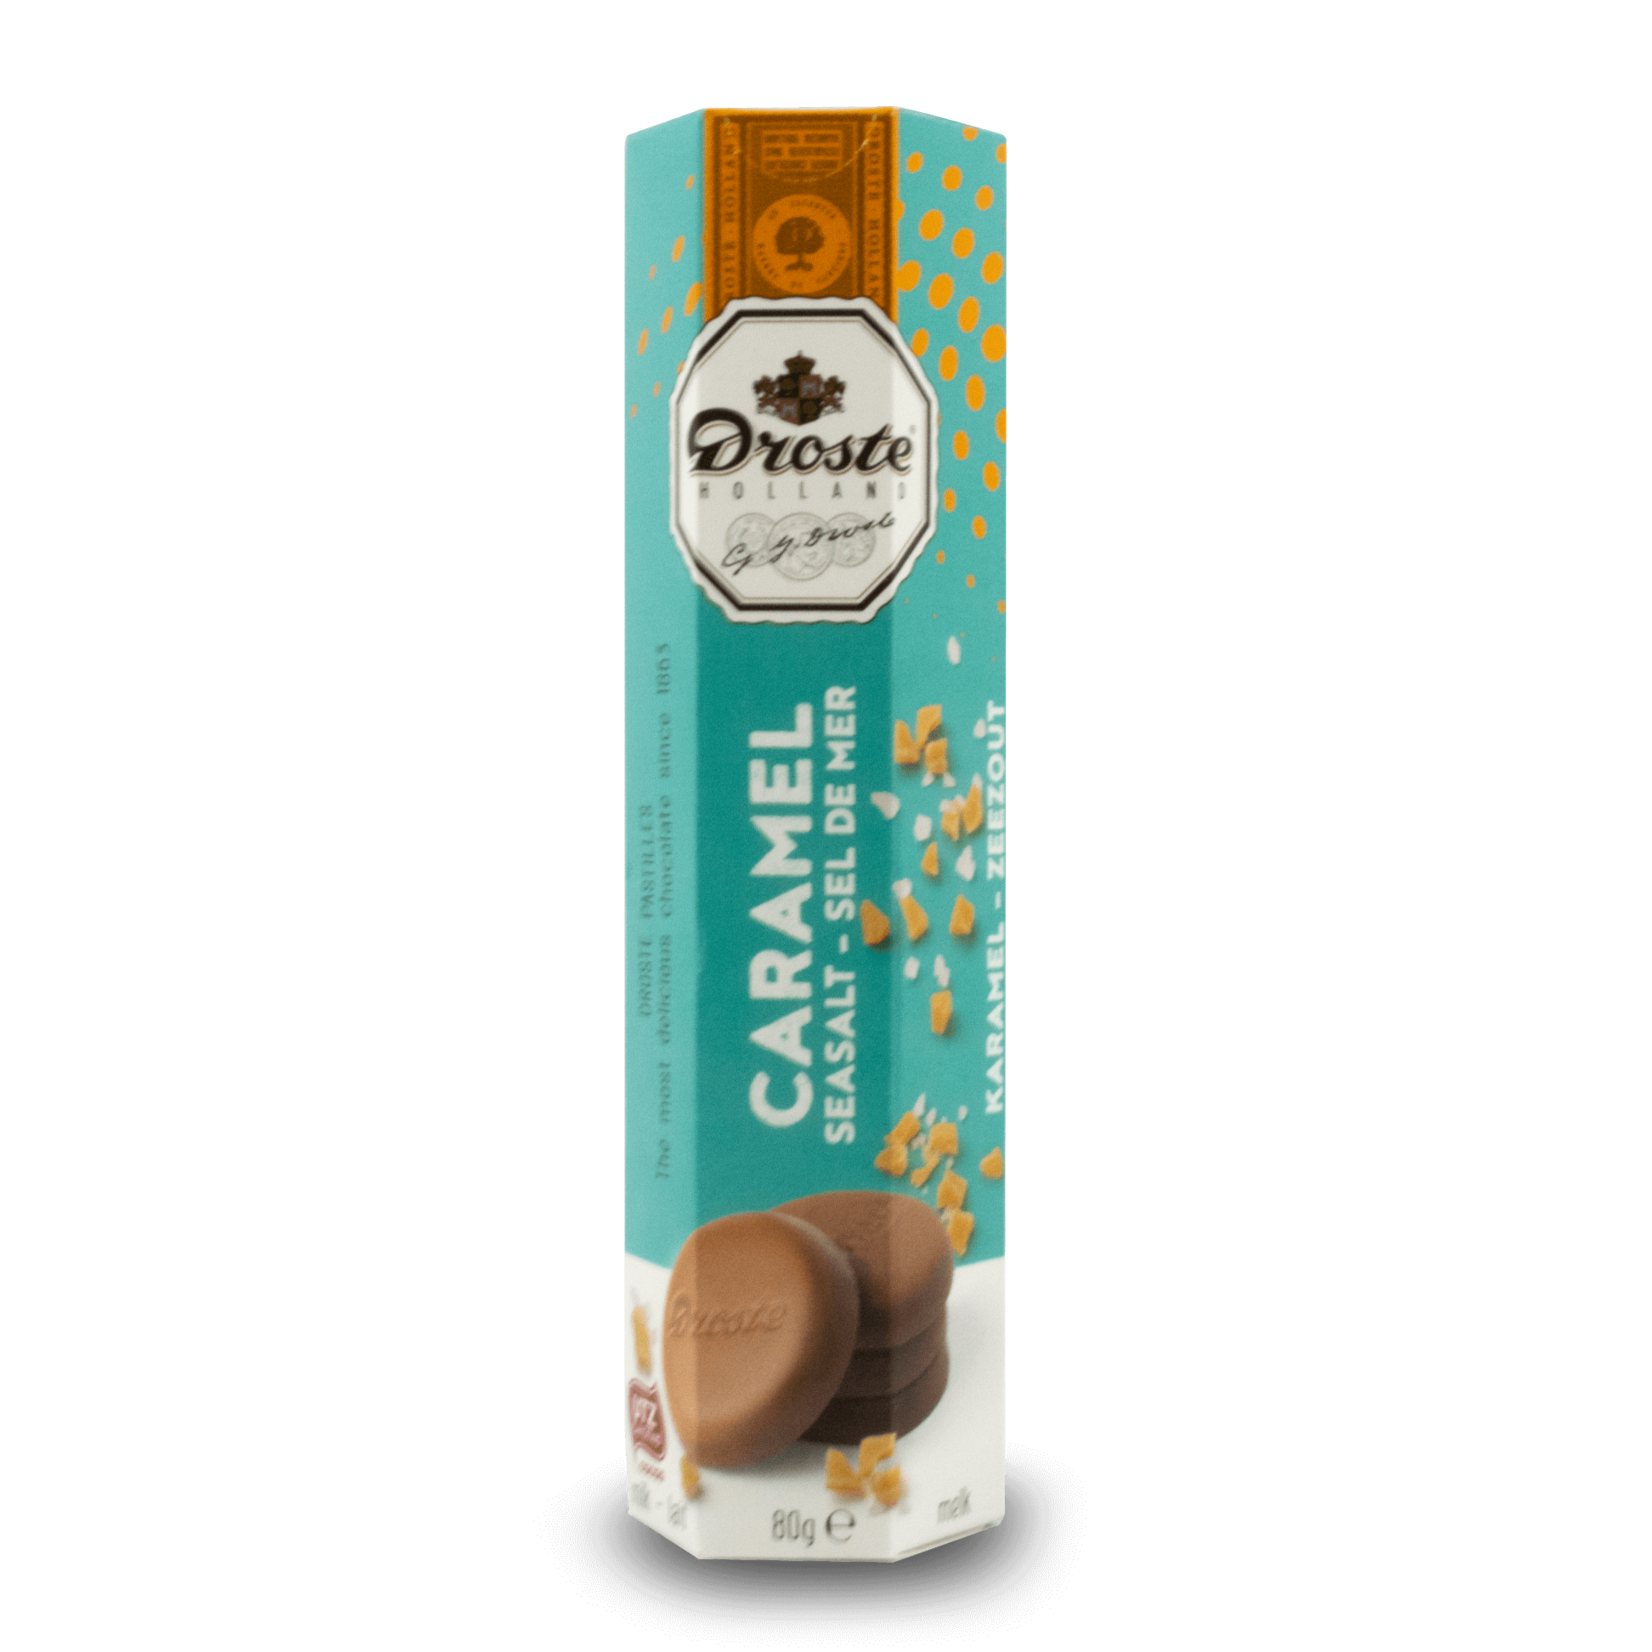 Droste Droste Chocolate Pastilles - Caramel Seasalt 80g